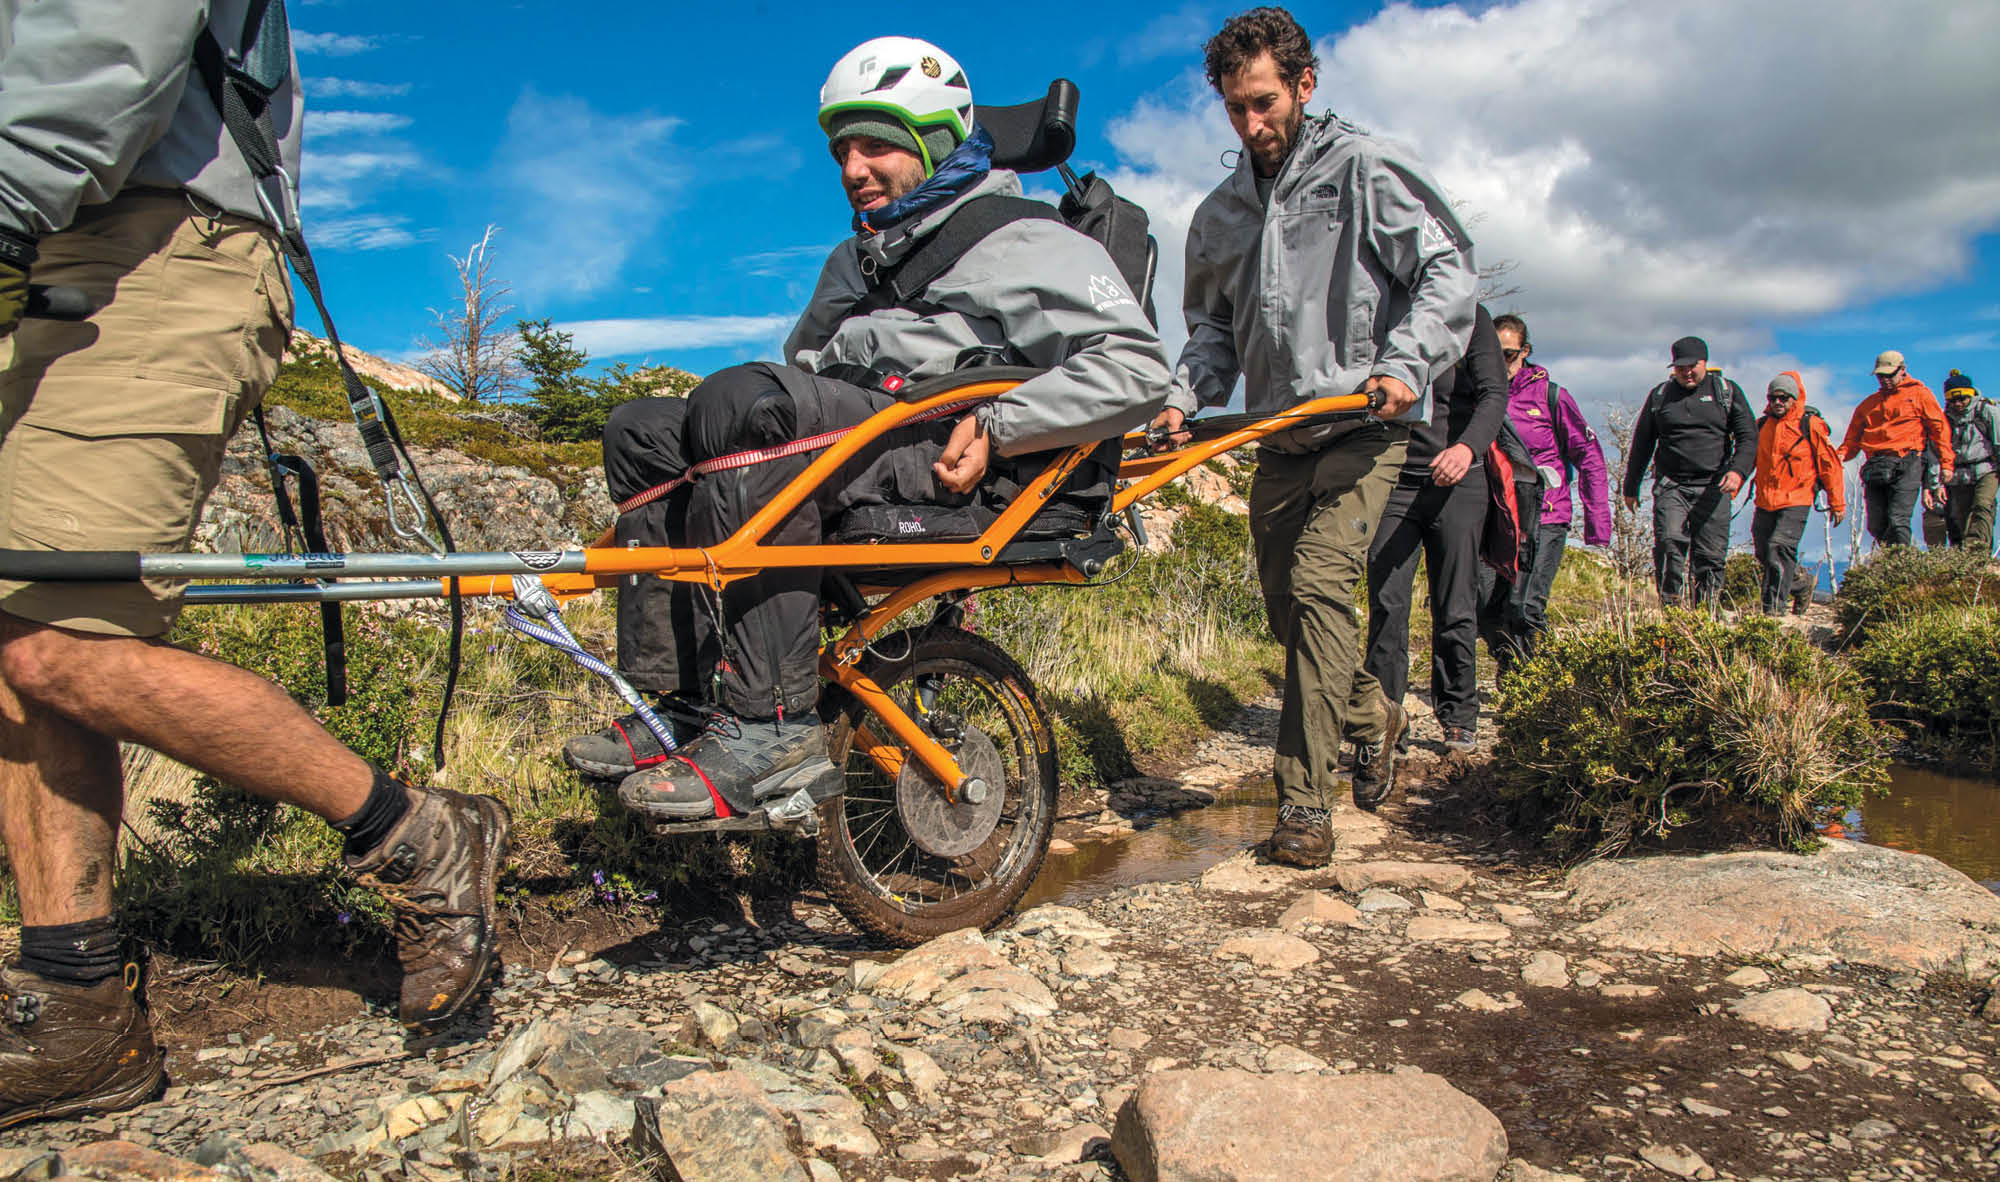 Man in a specialized wheelchair made for trekking through rough terrain.